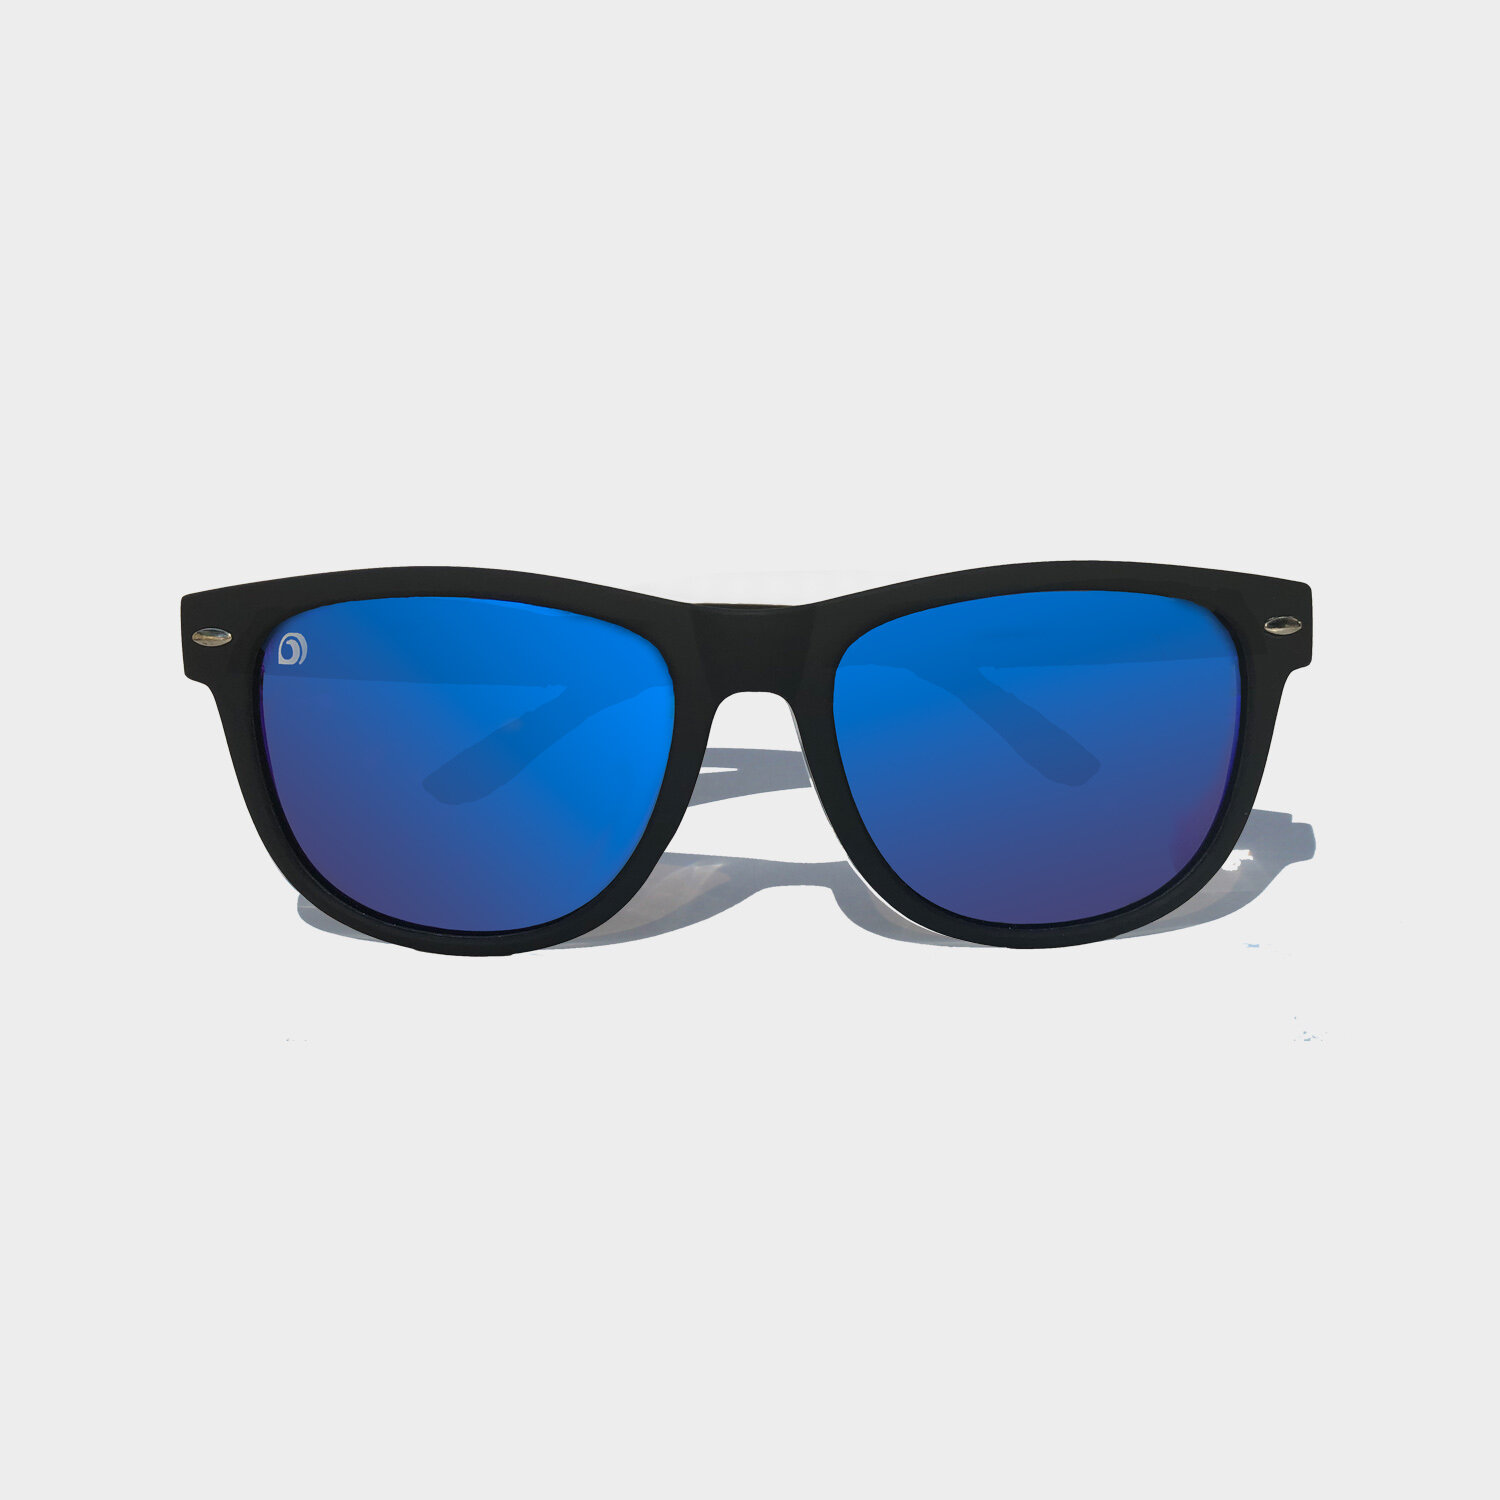 Details more than 221 matte black sunglasses latest